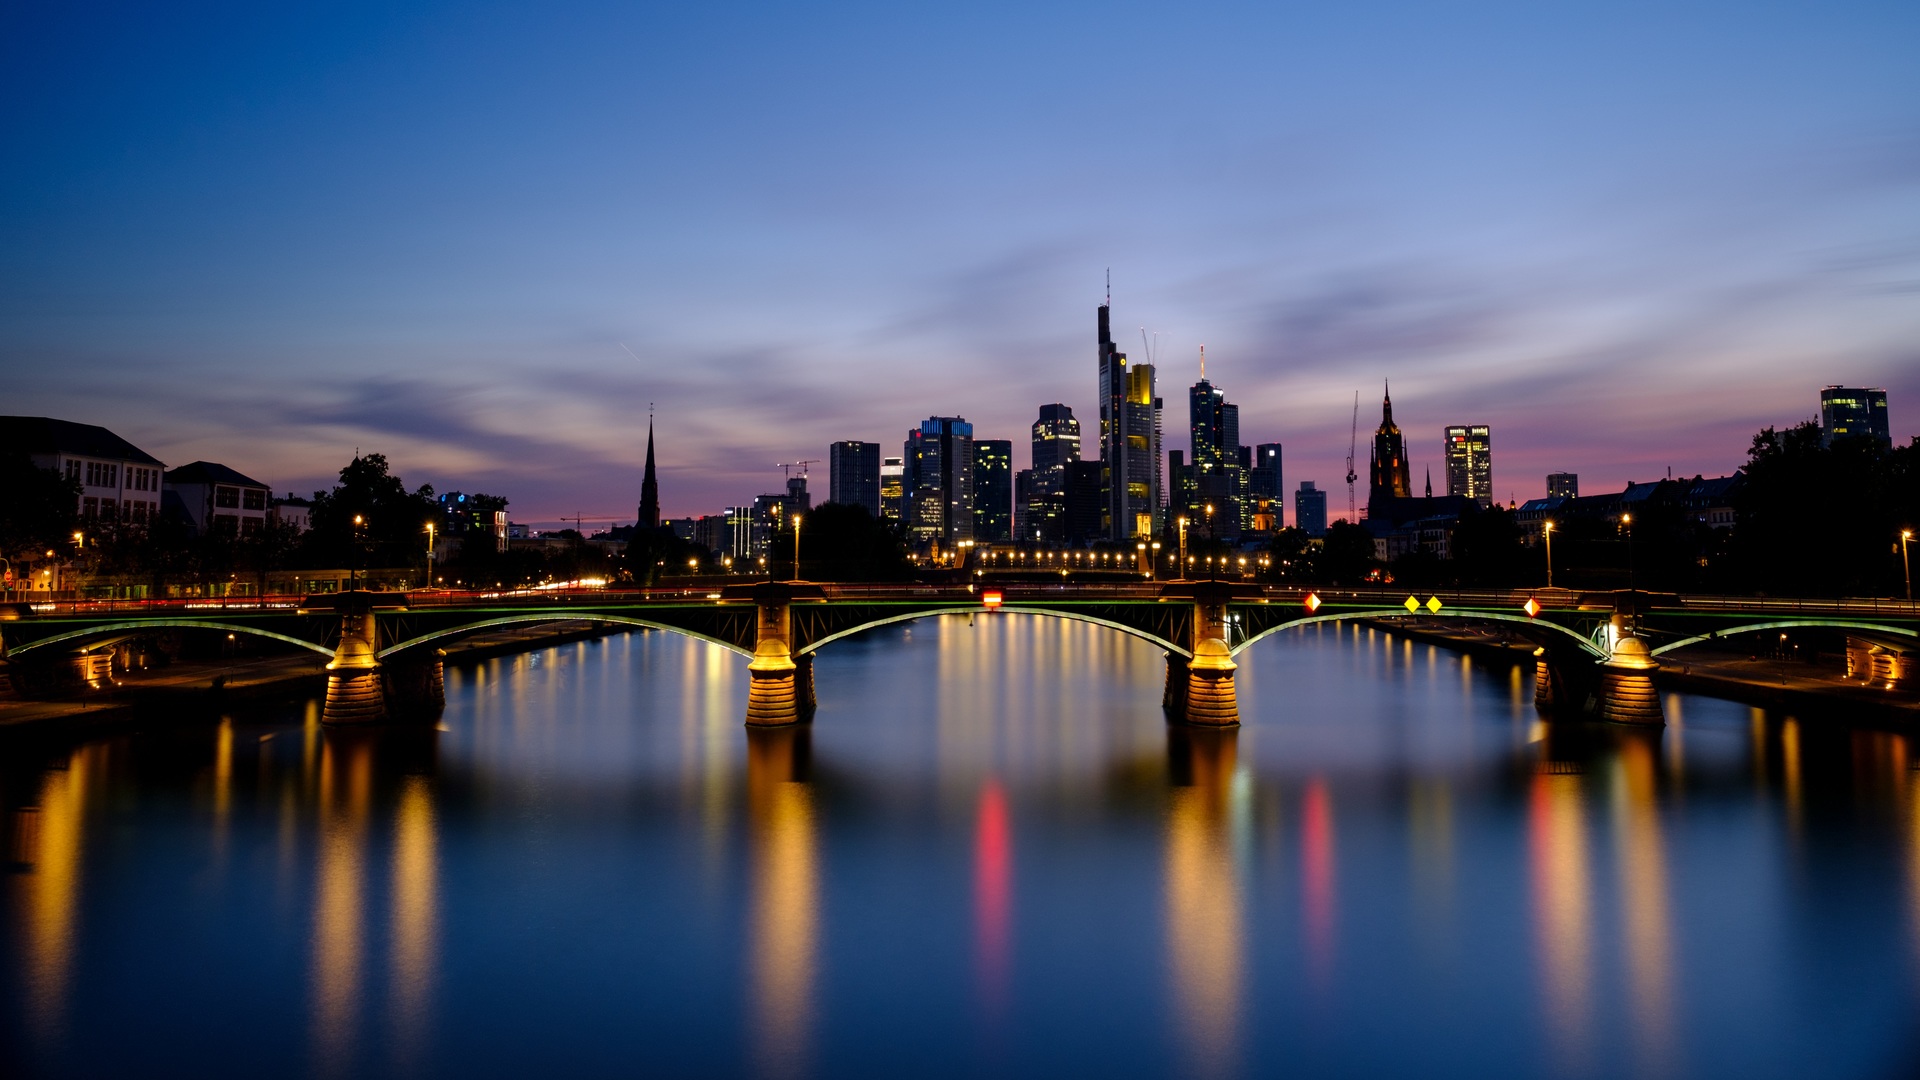 Bridge Germany Frankfurt Night Lights 1920x1080